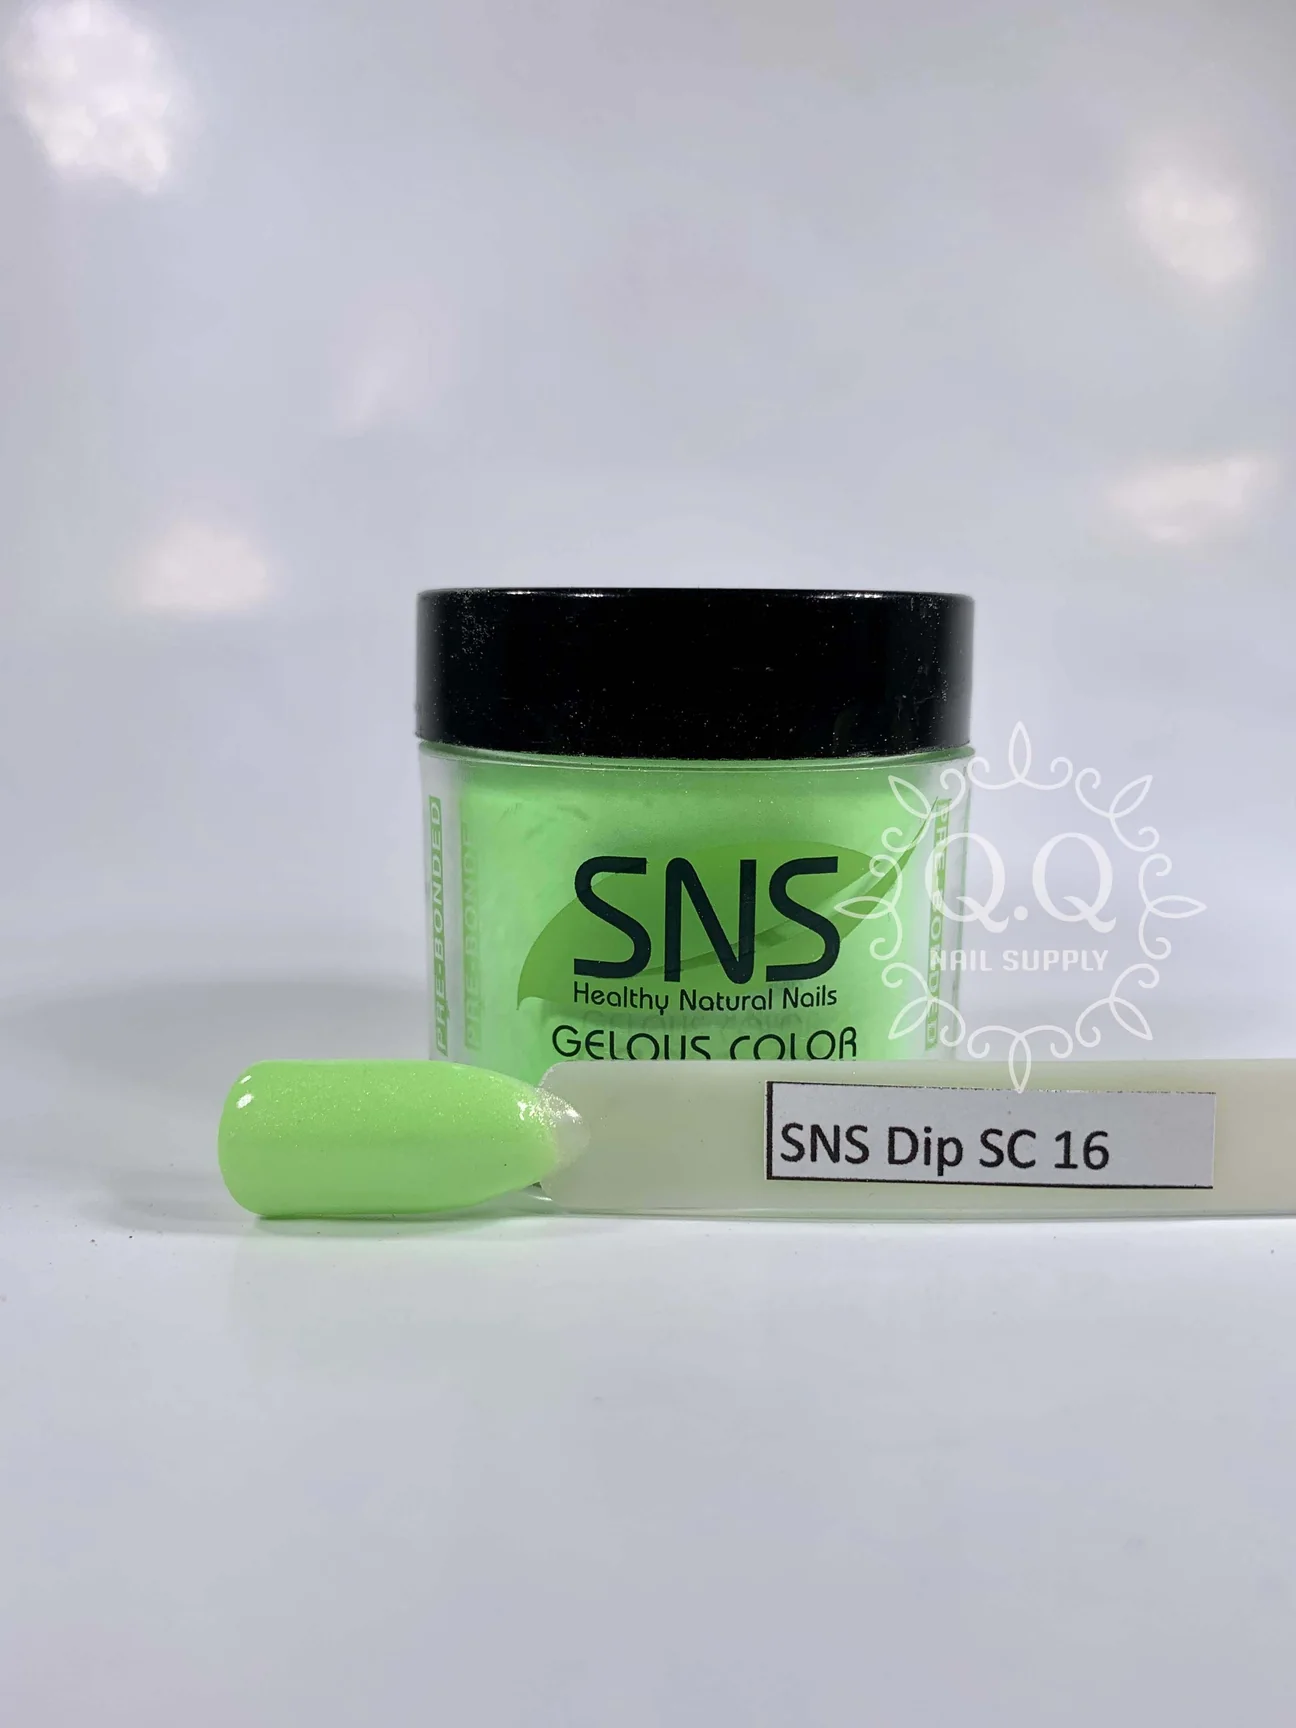 SNS Nails SC16 28g (1oz) | Gelous Dipping Powder